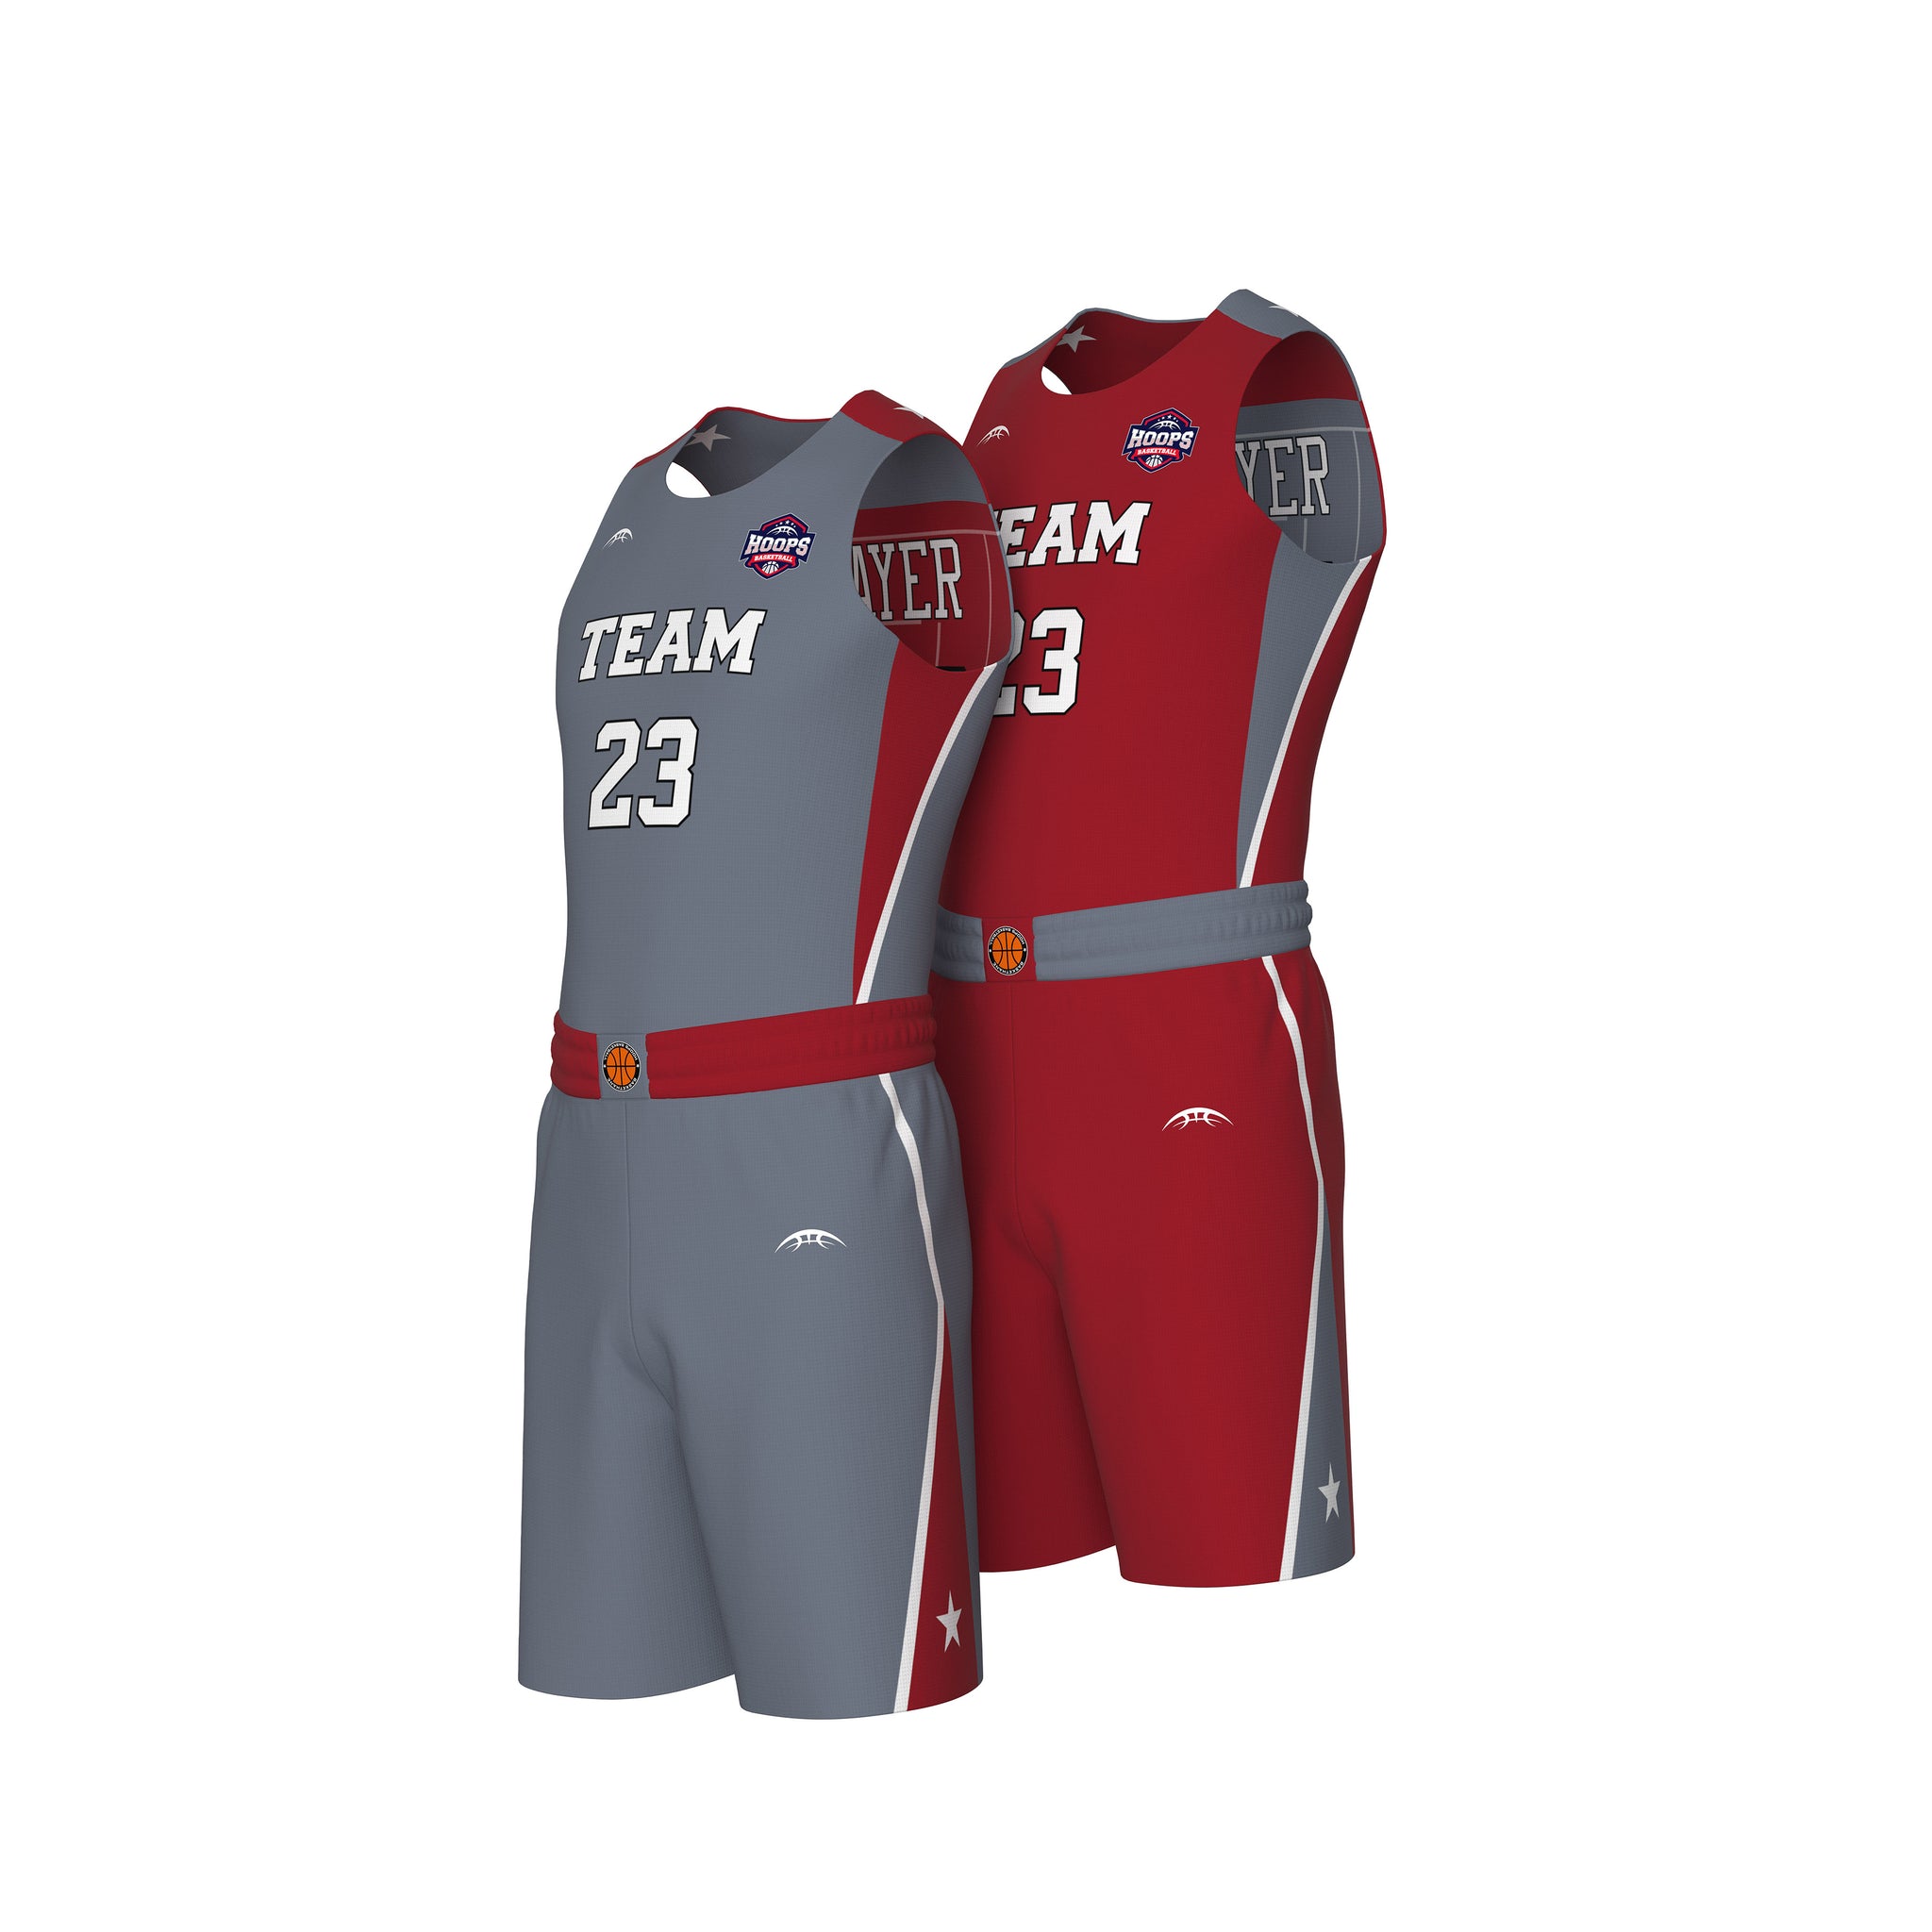 New Nike FIBA 3x3 Reversible Basketball Jersey Red Whit